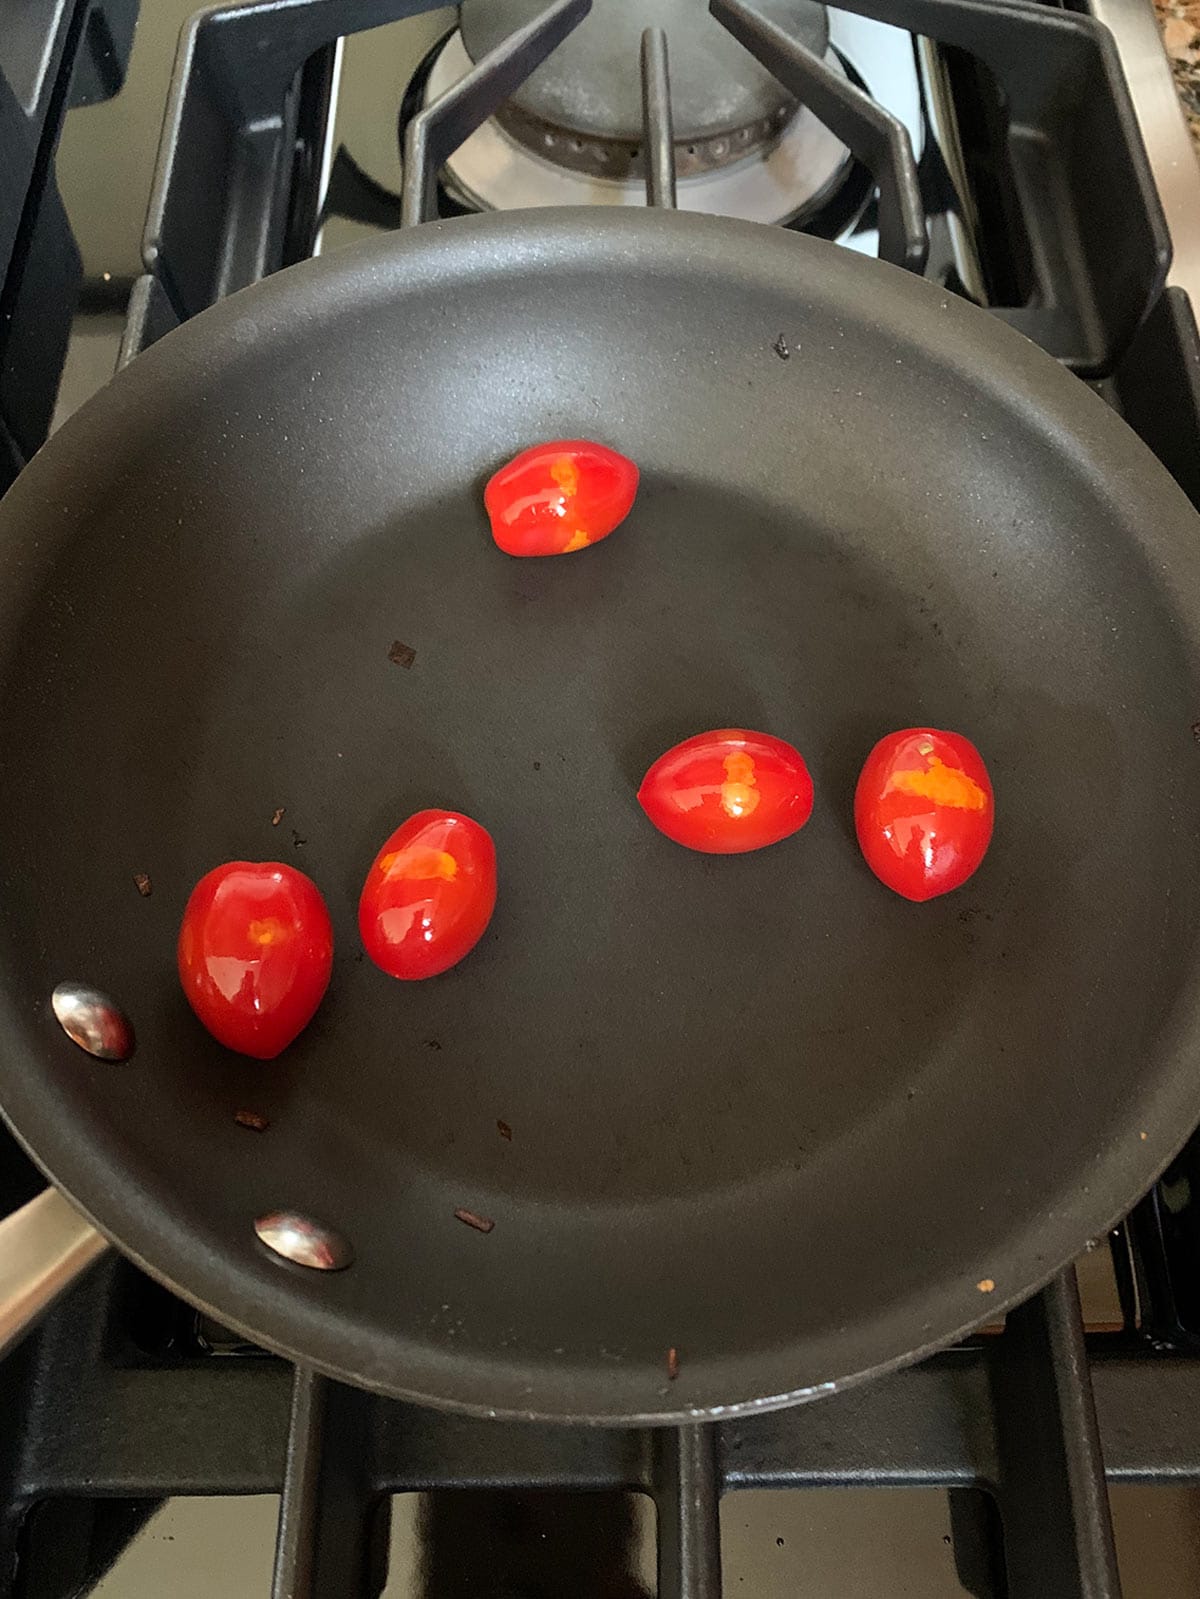 Cherry tomatoes in saute pan.